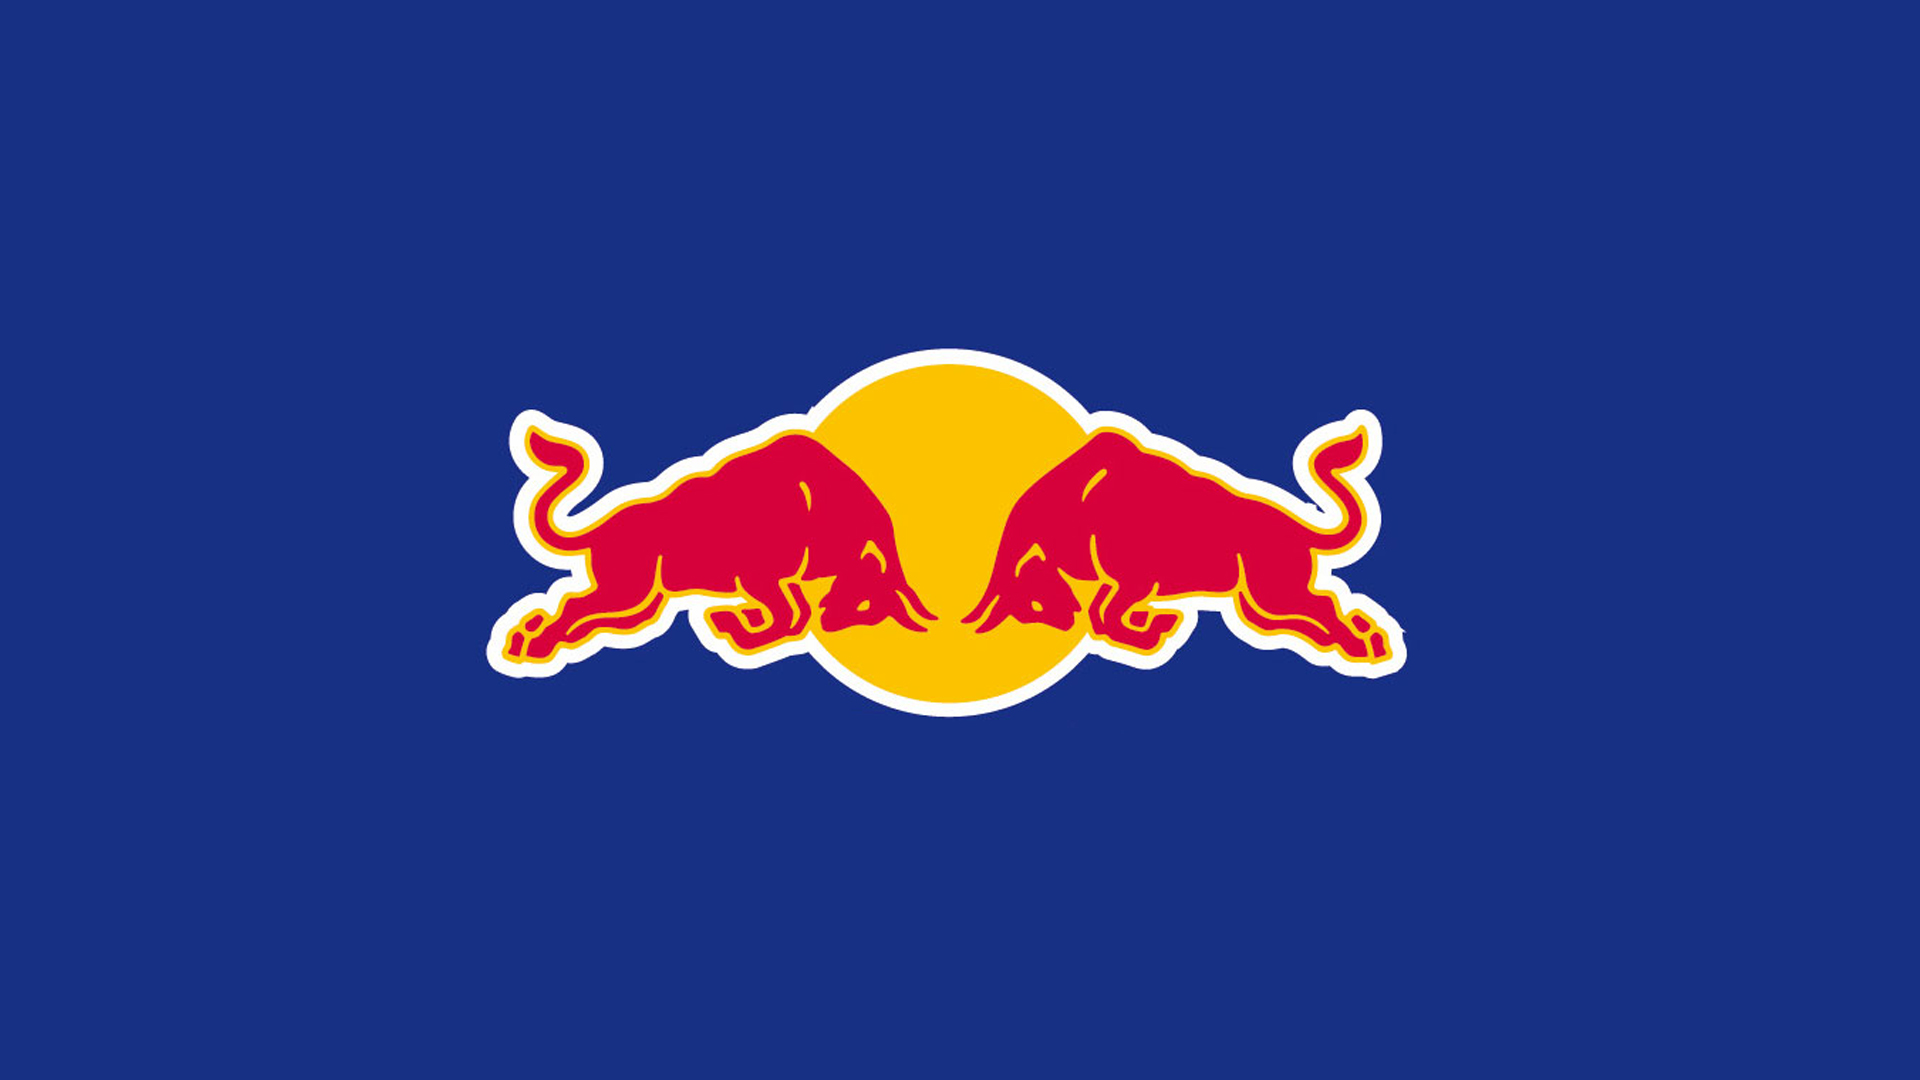 Home Red Bull Advanced Technologies